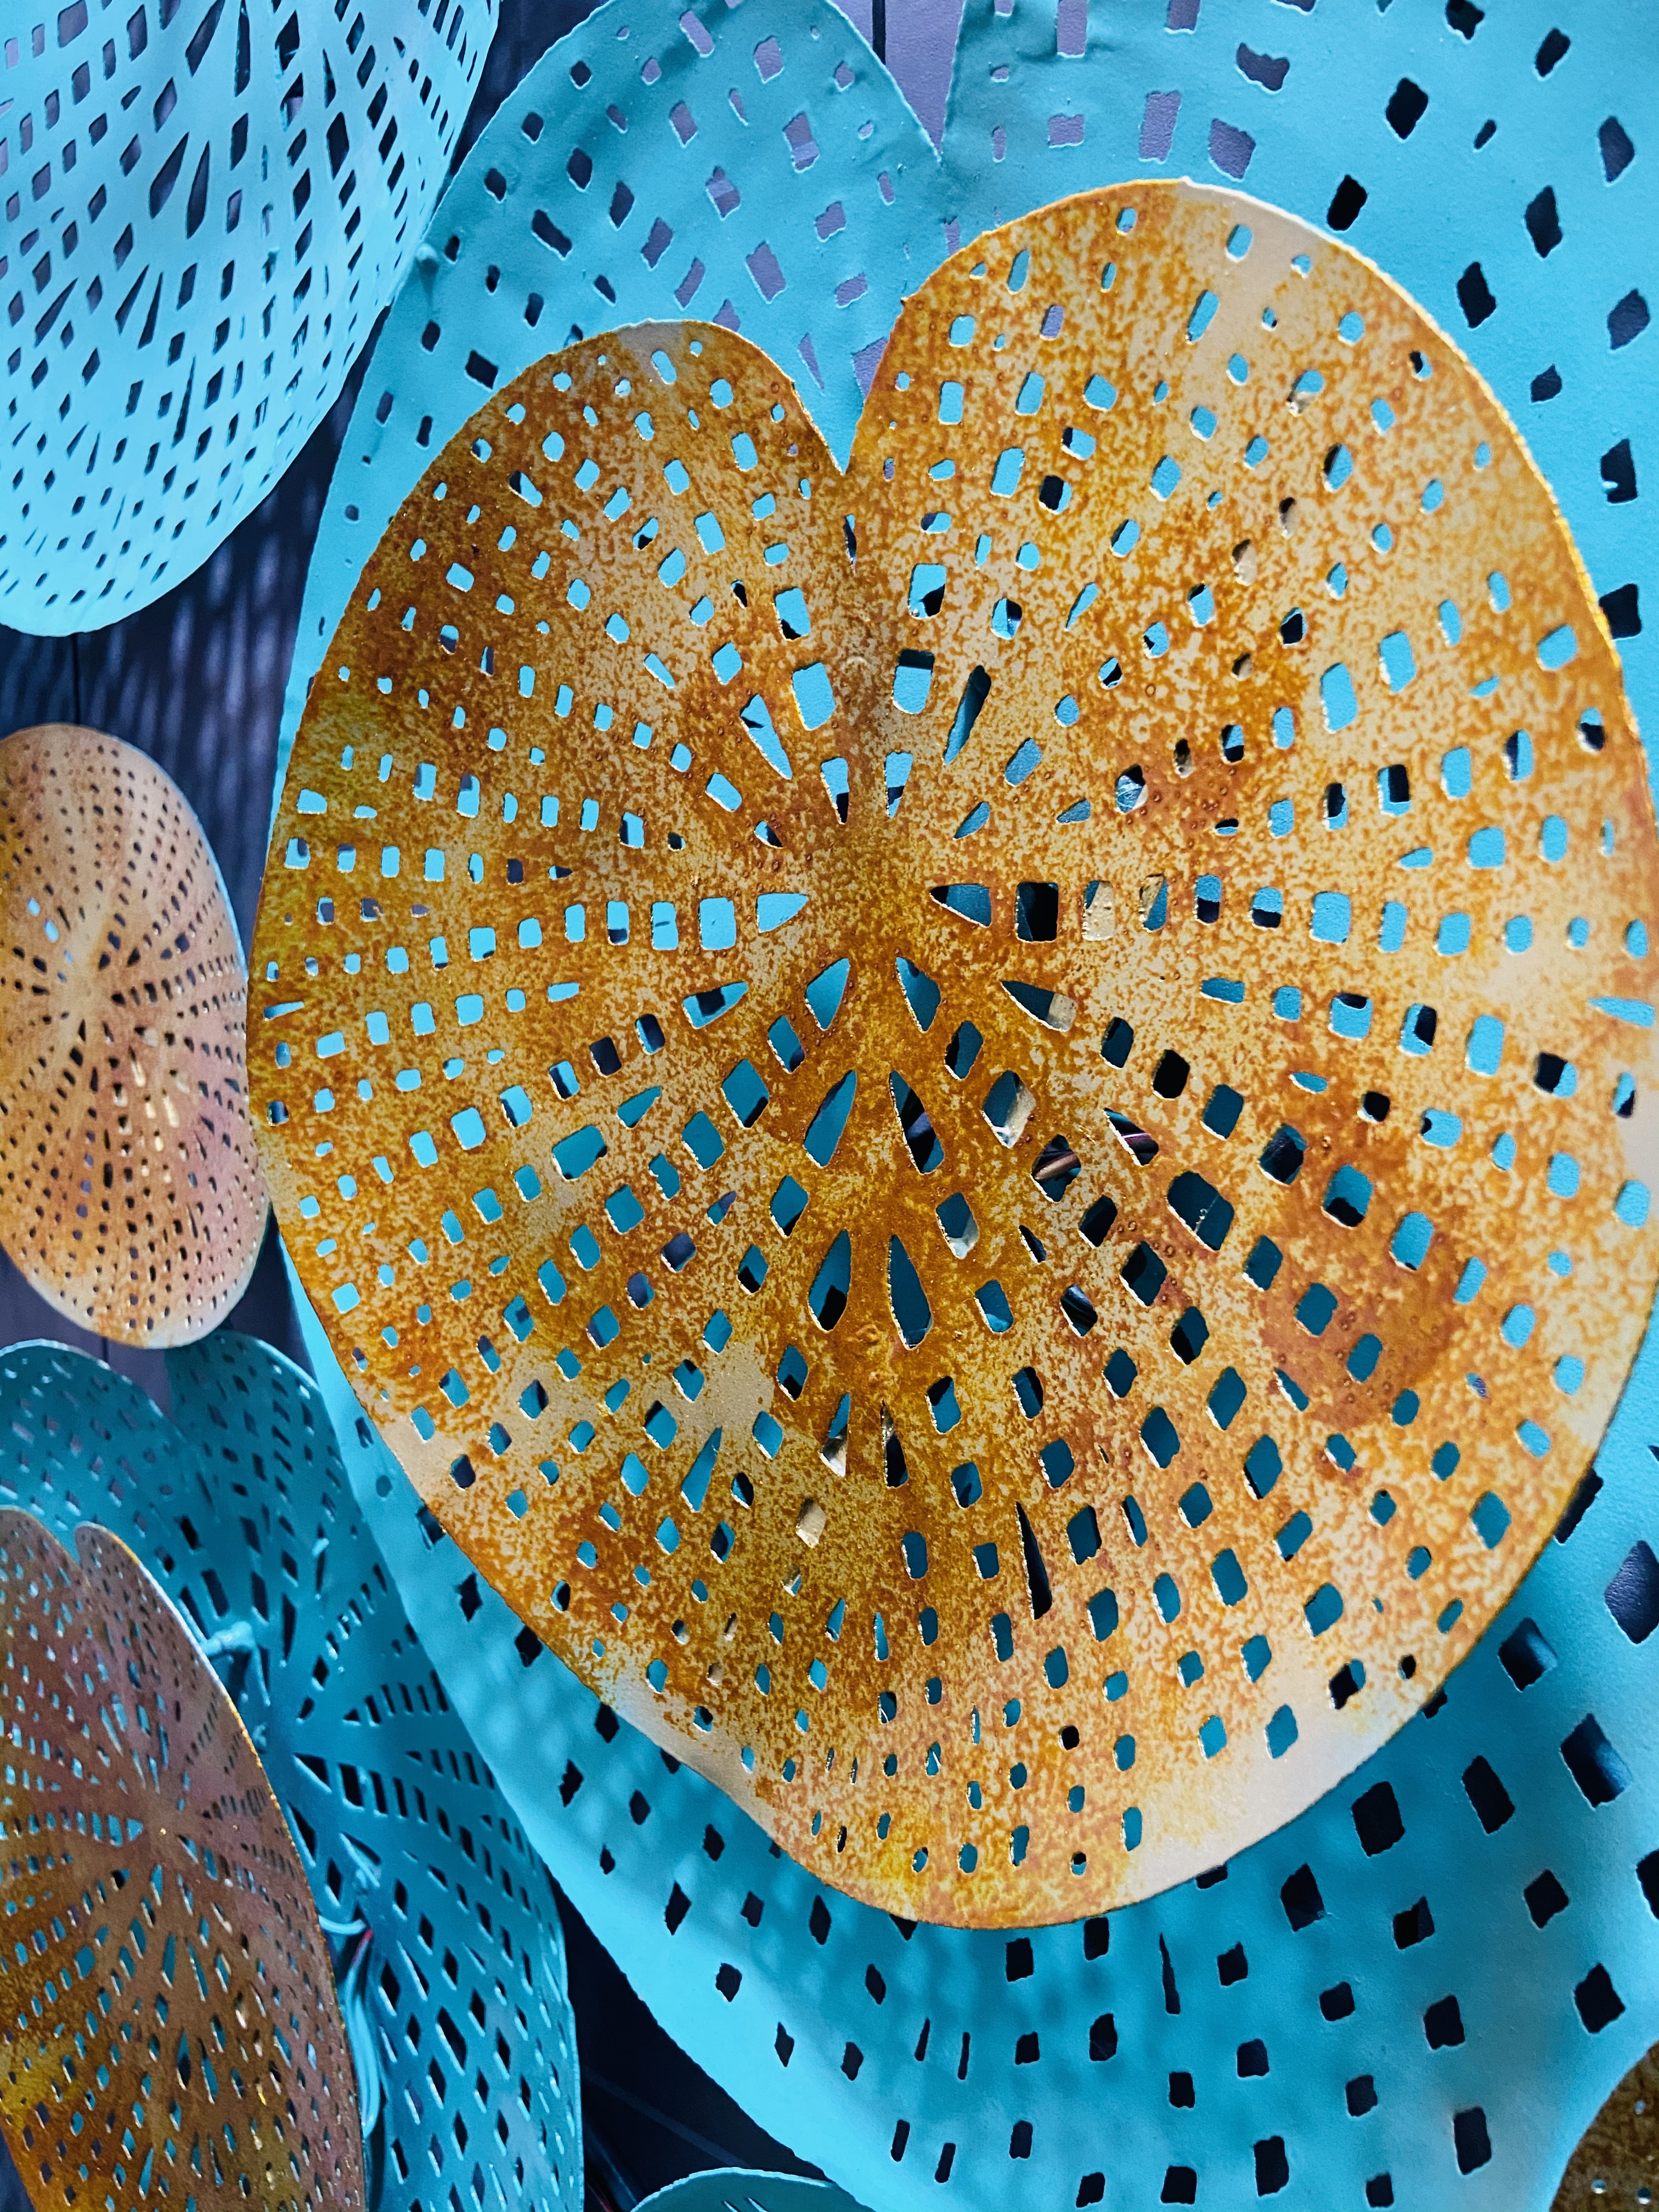 lotus-leaf-frame-metal-wall-art